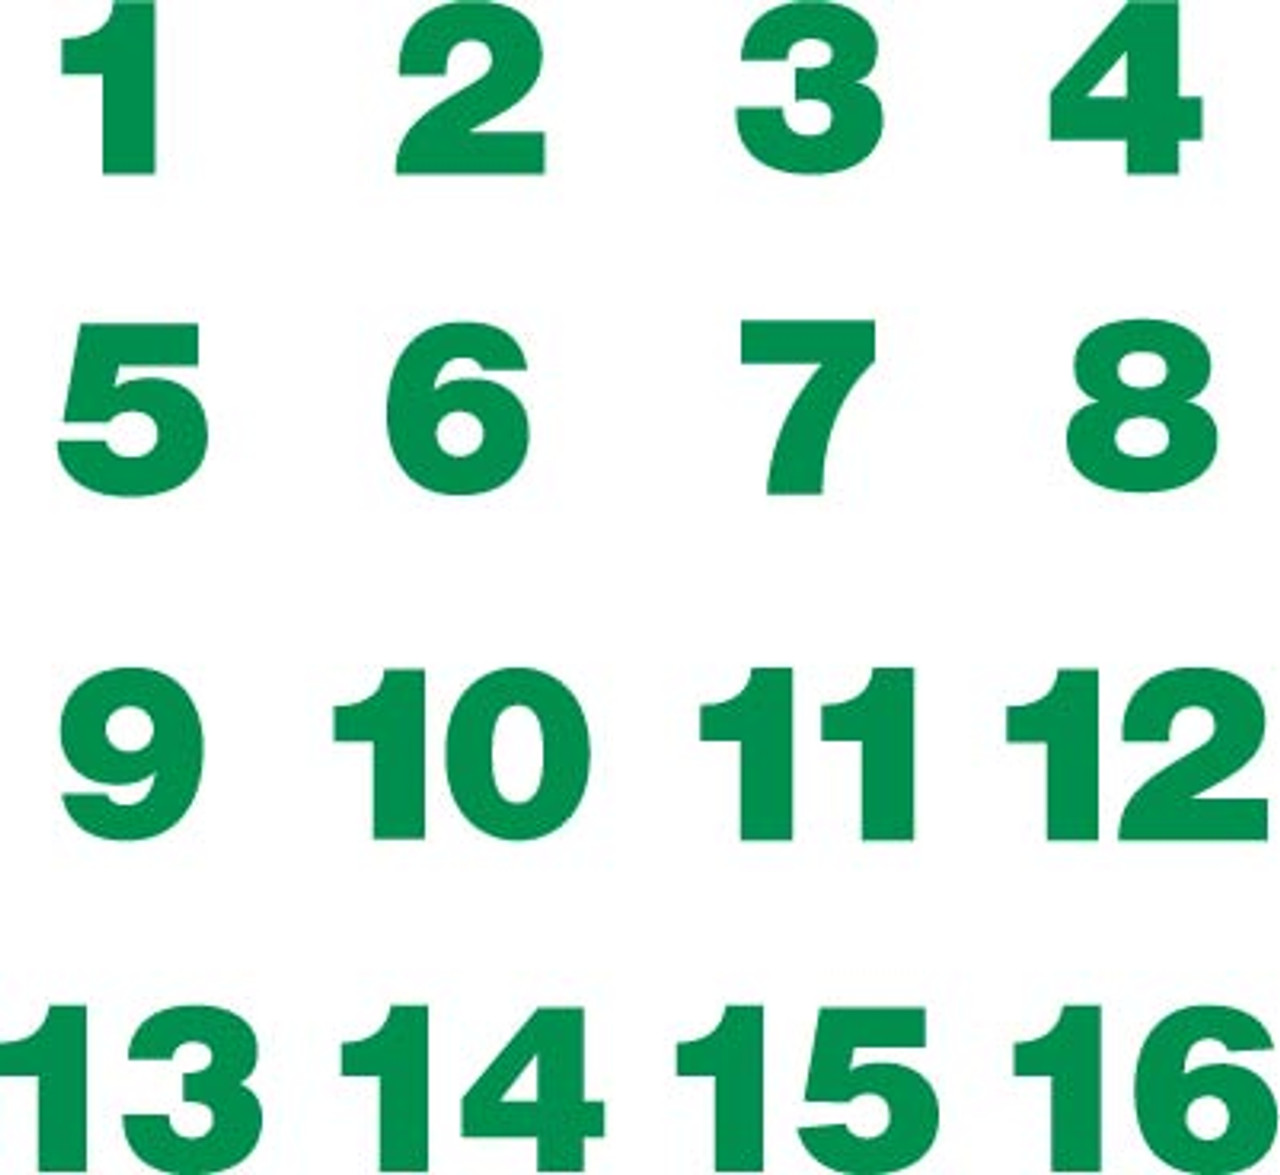 EU04001G520 - 2.5" Green Cut Numbers 1-16